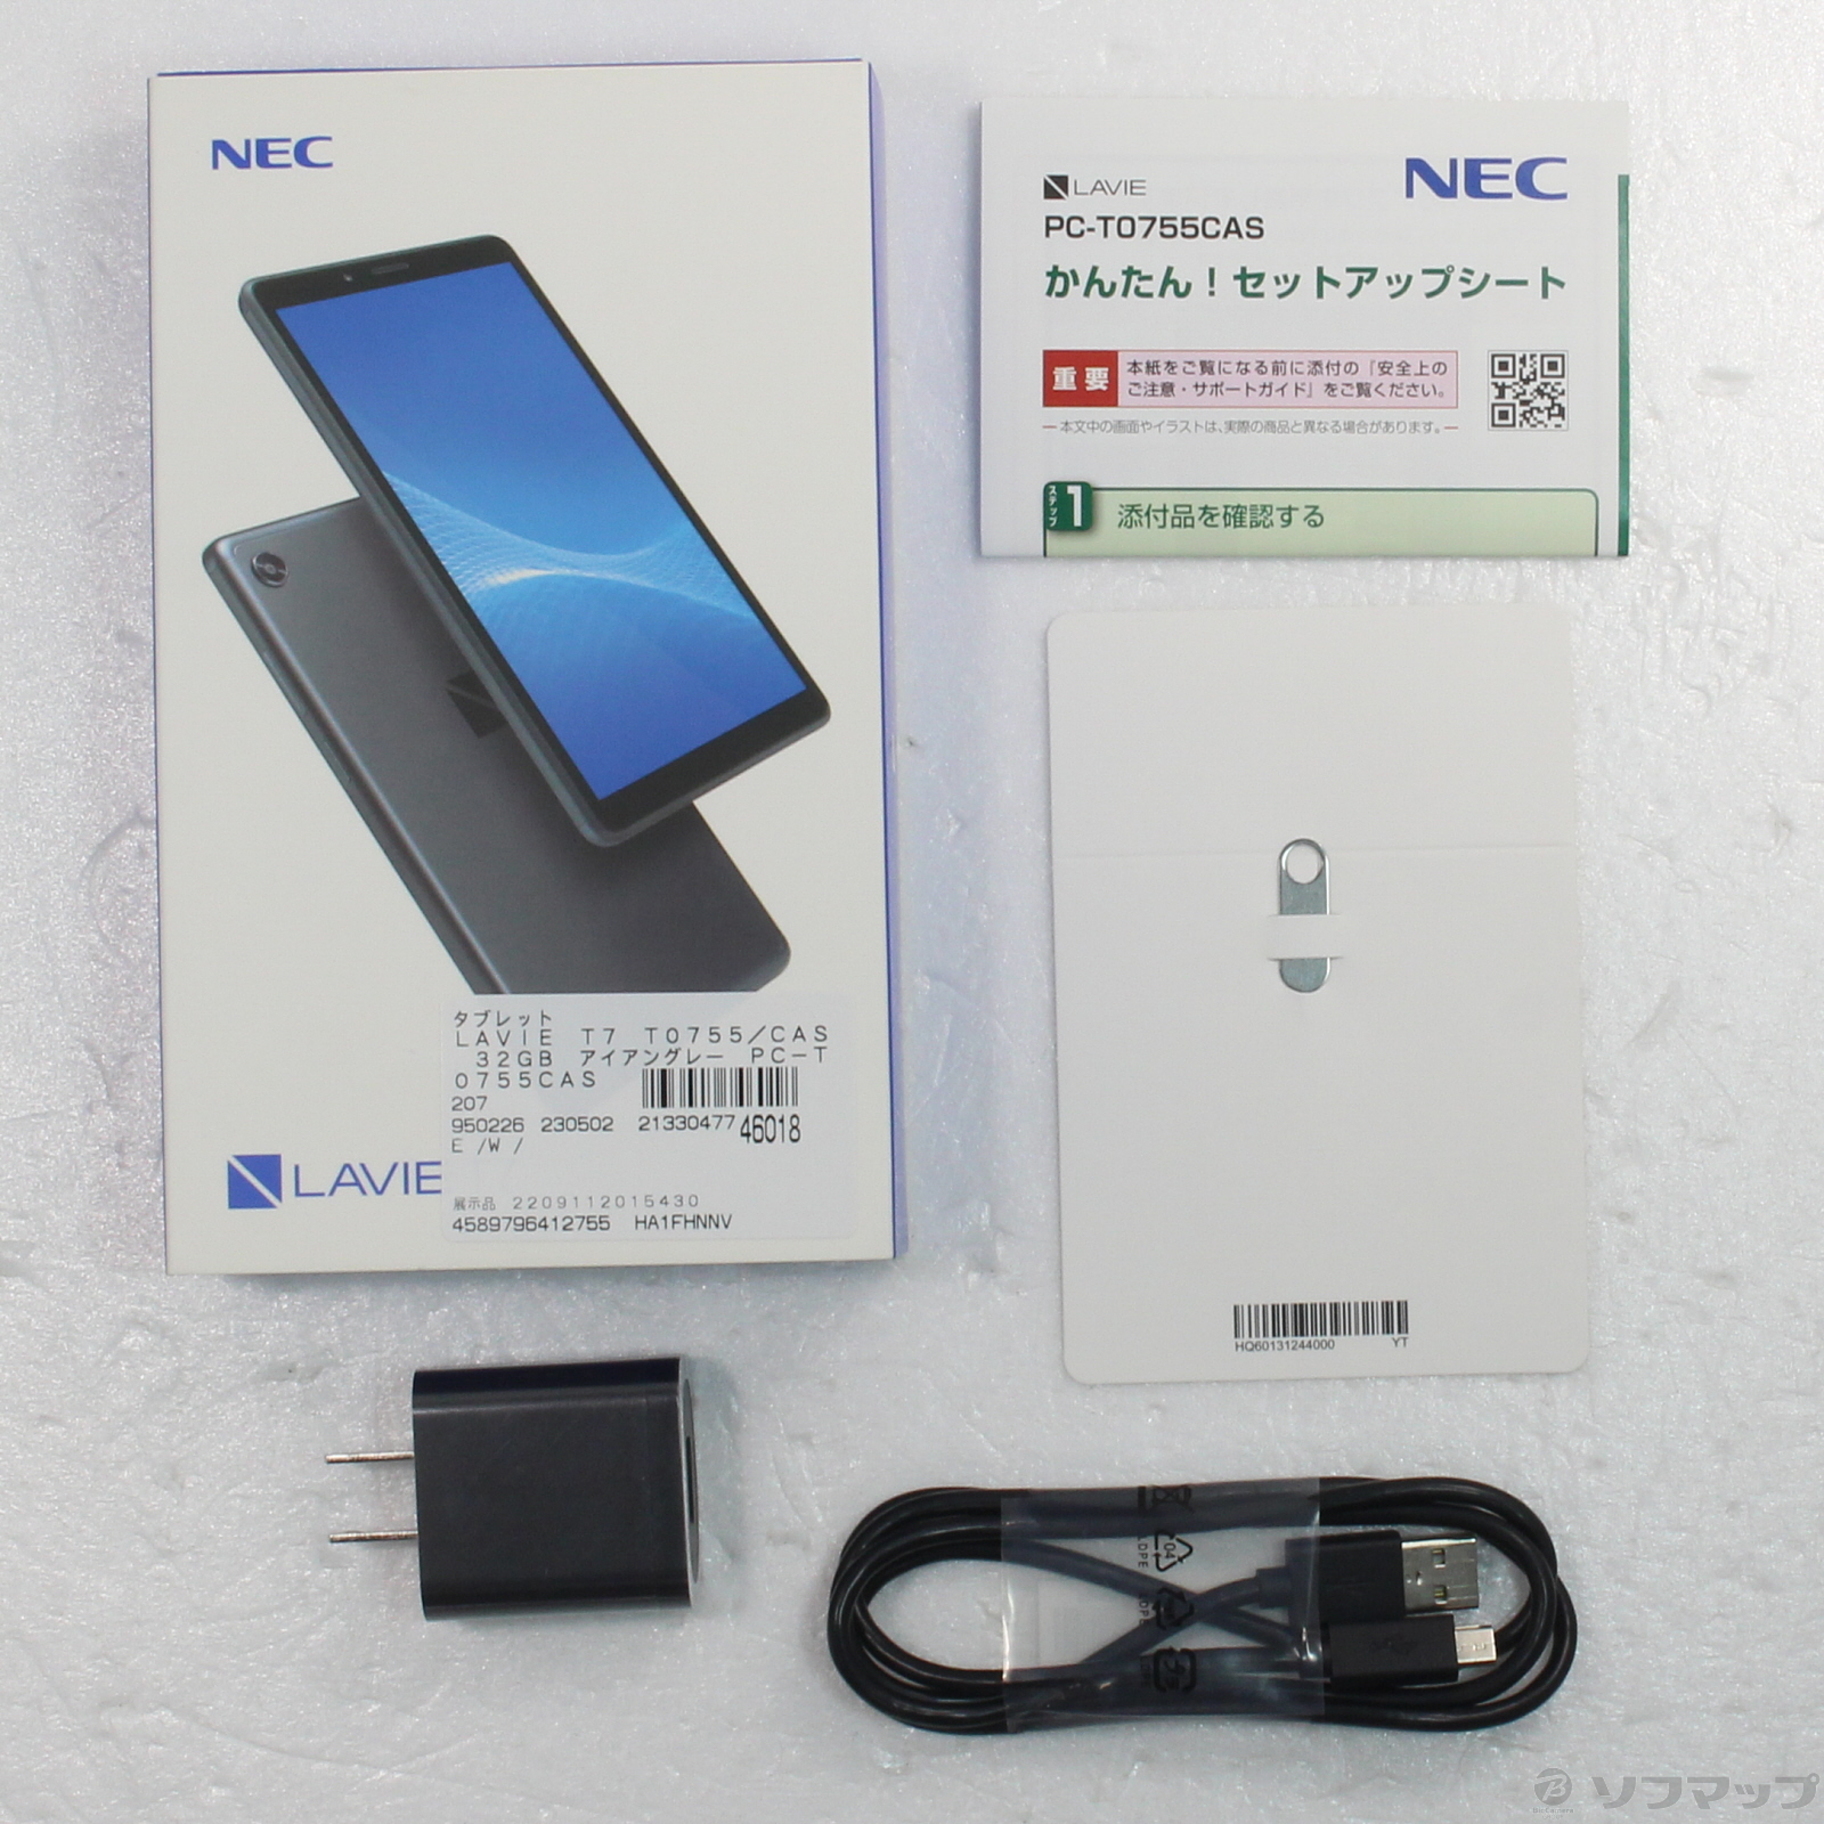 NEC PC-T0755CAS LAVIE T7 7SD1 アイアングレー タブレット Android